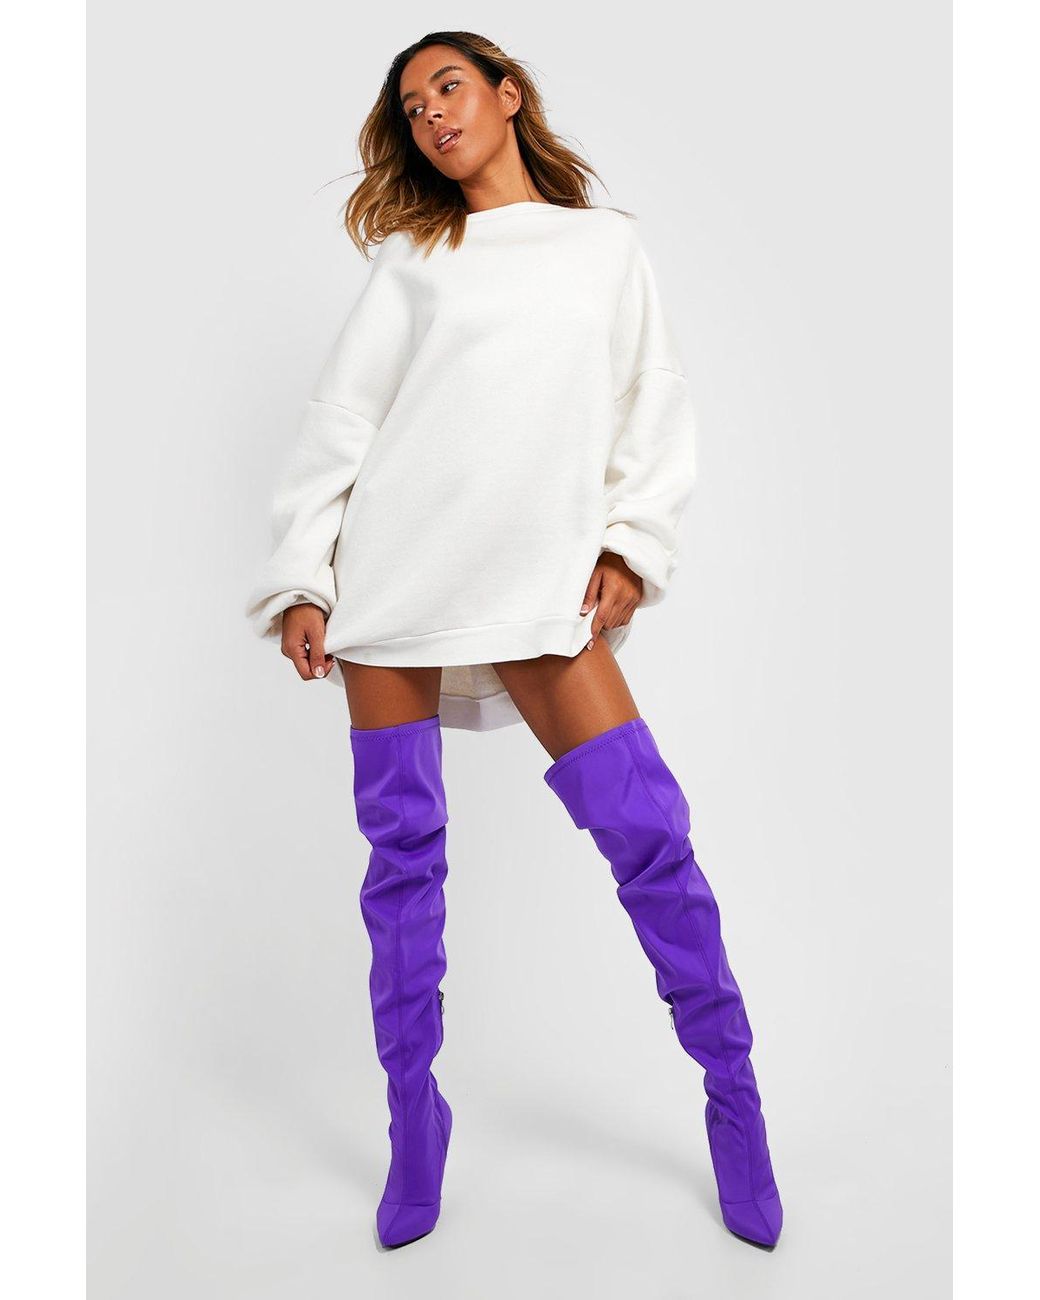 Boohoo Stretch Neoprene Thigh High Stiletto Boots in White | Lyst